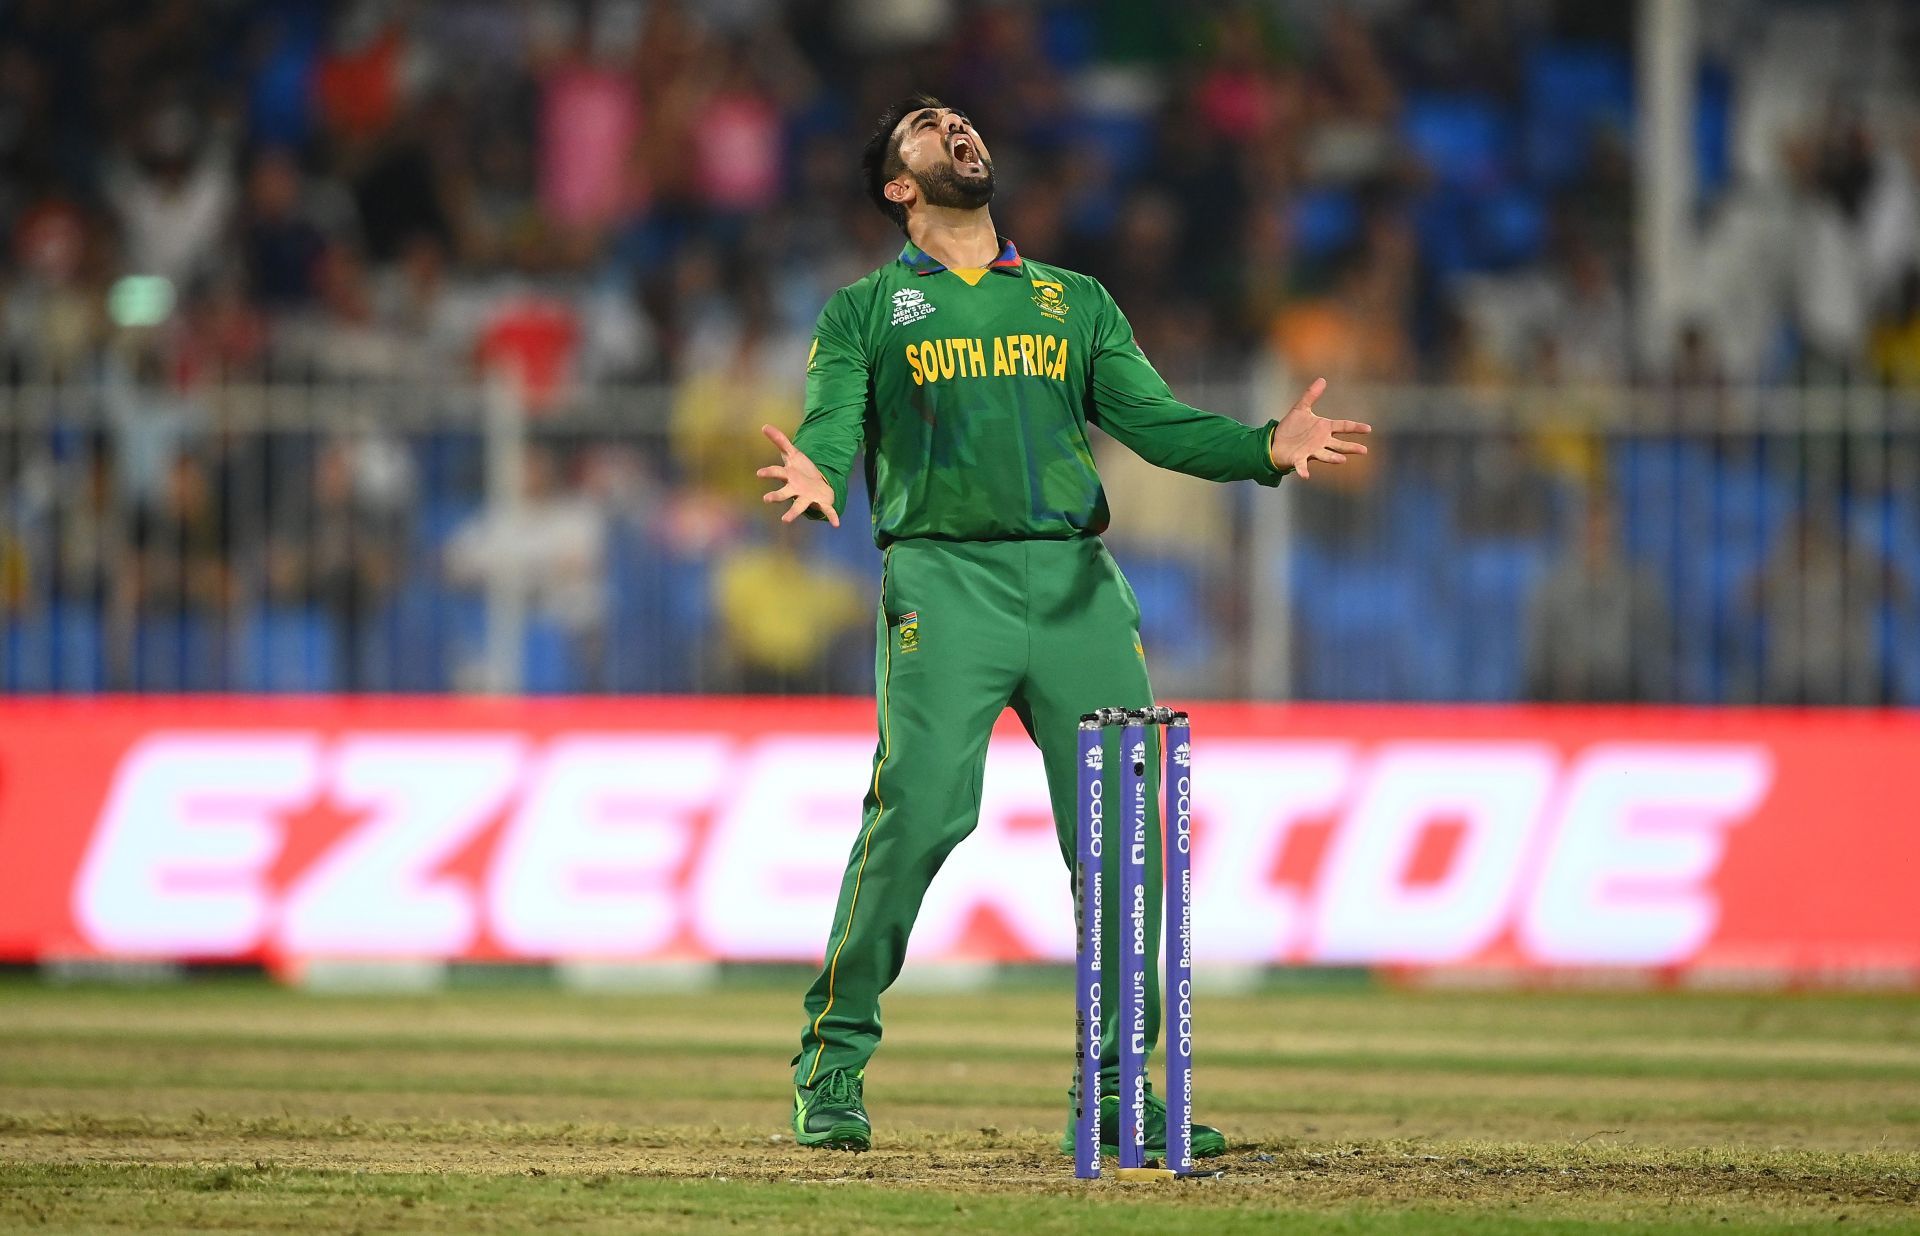 Tabraiz Shamsi scalped 36 wickets for South Africa